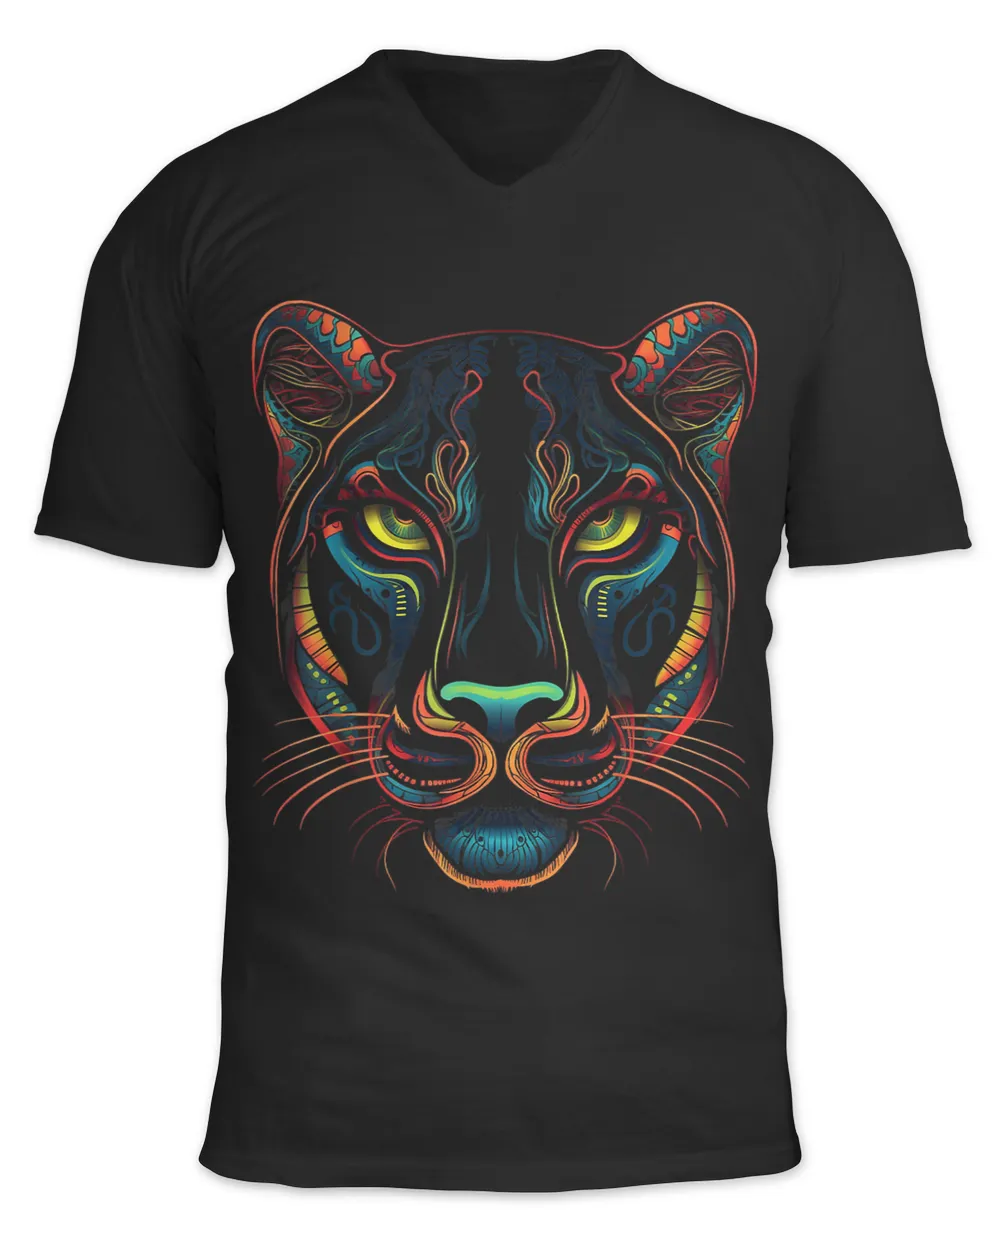 Panther Gift Graffiti Pop Art Of Panther Animal Graphic Tee for Men Women